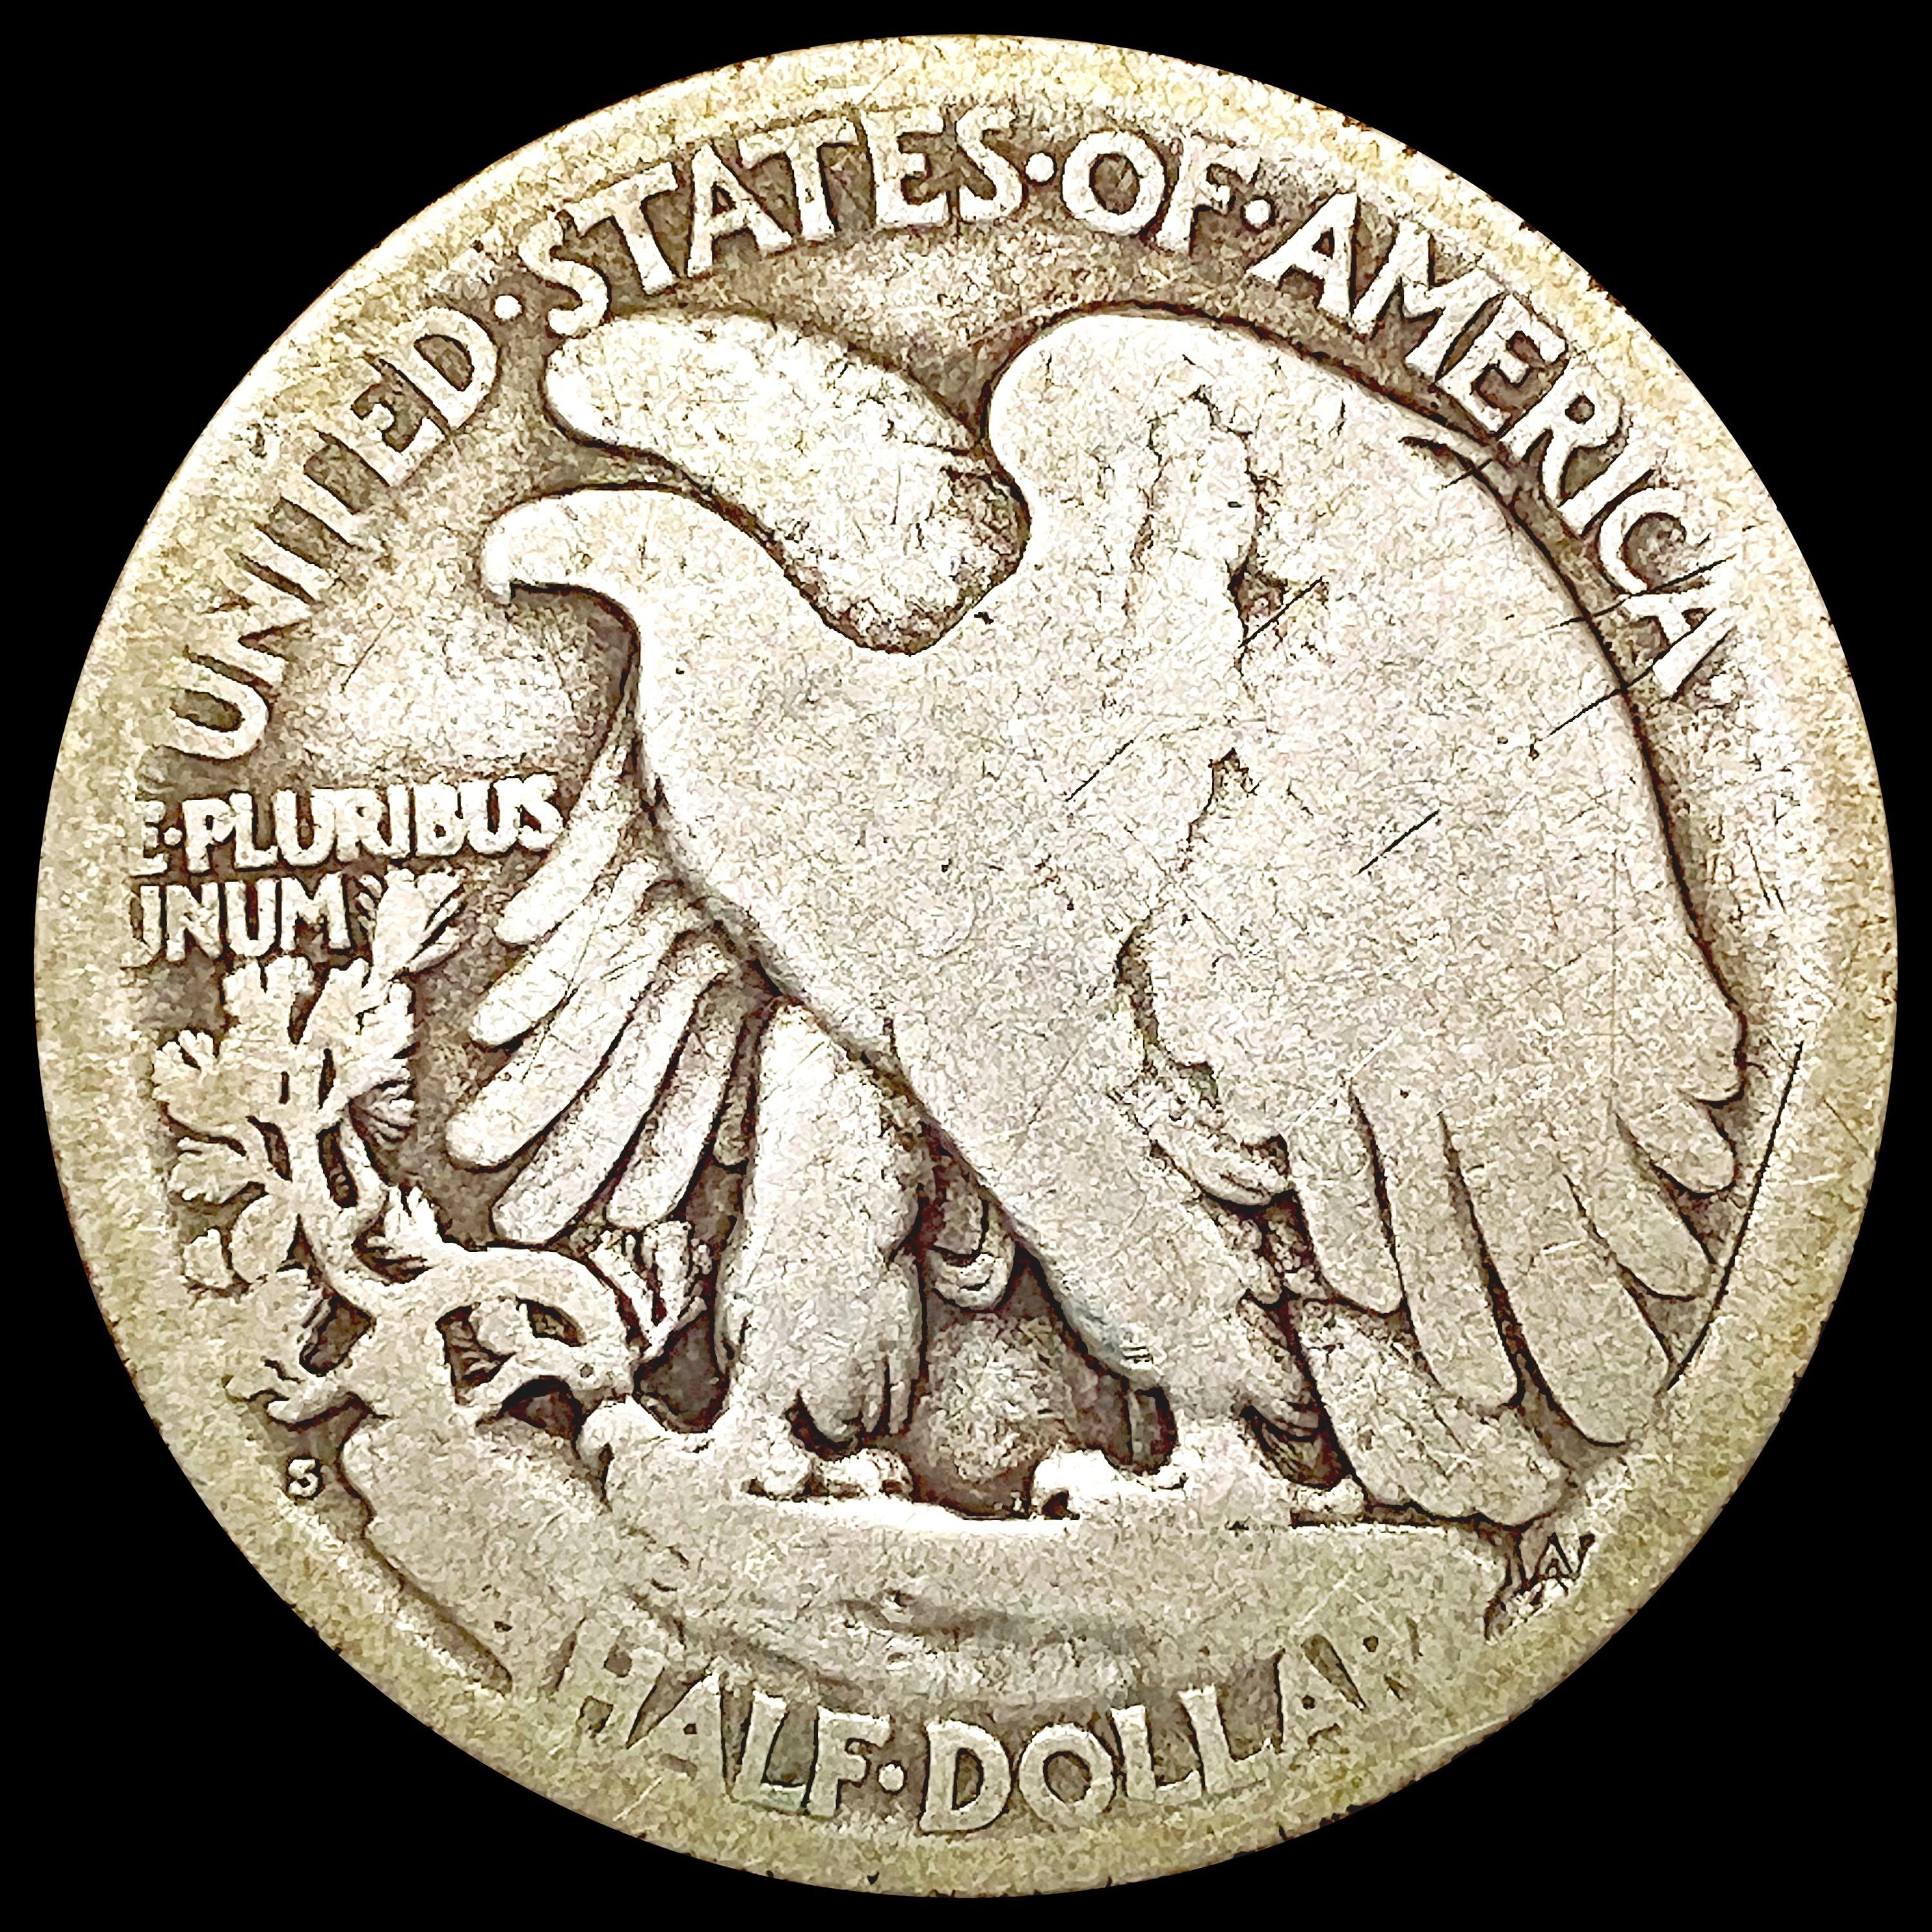 1921-S Walking Liberty Half Dollar NICELY CIRCULAT